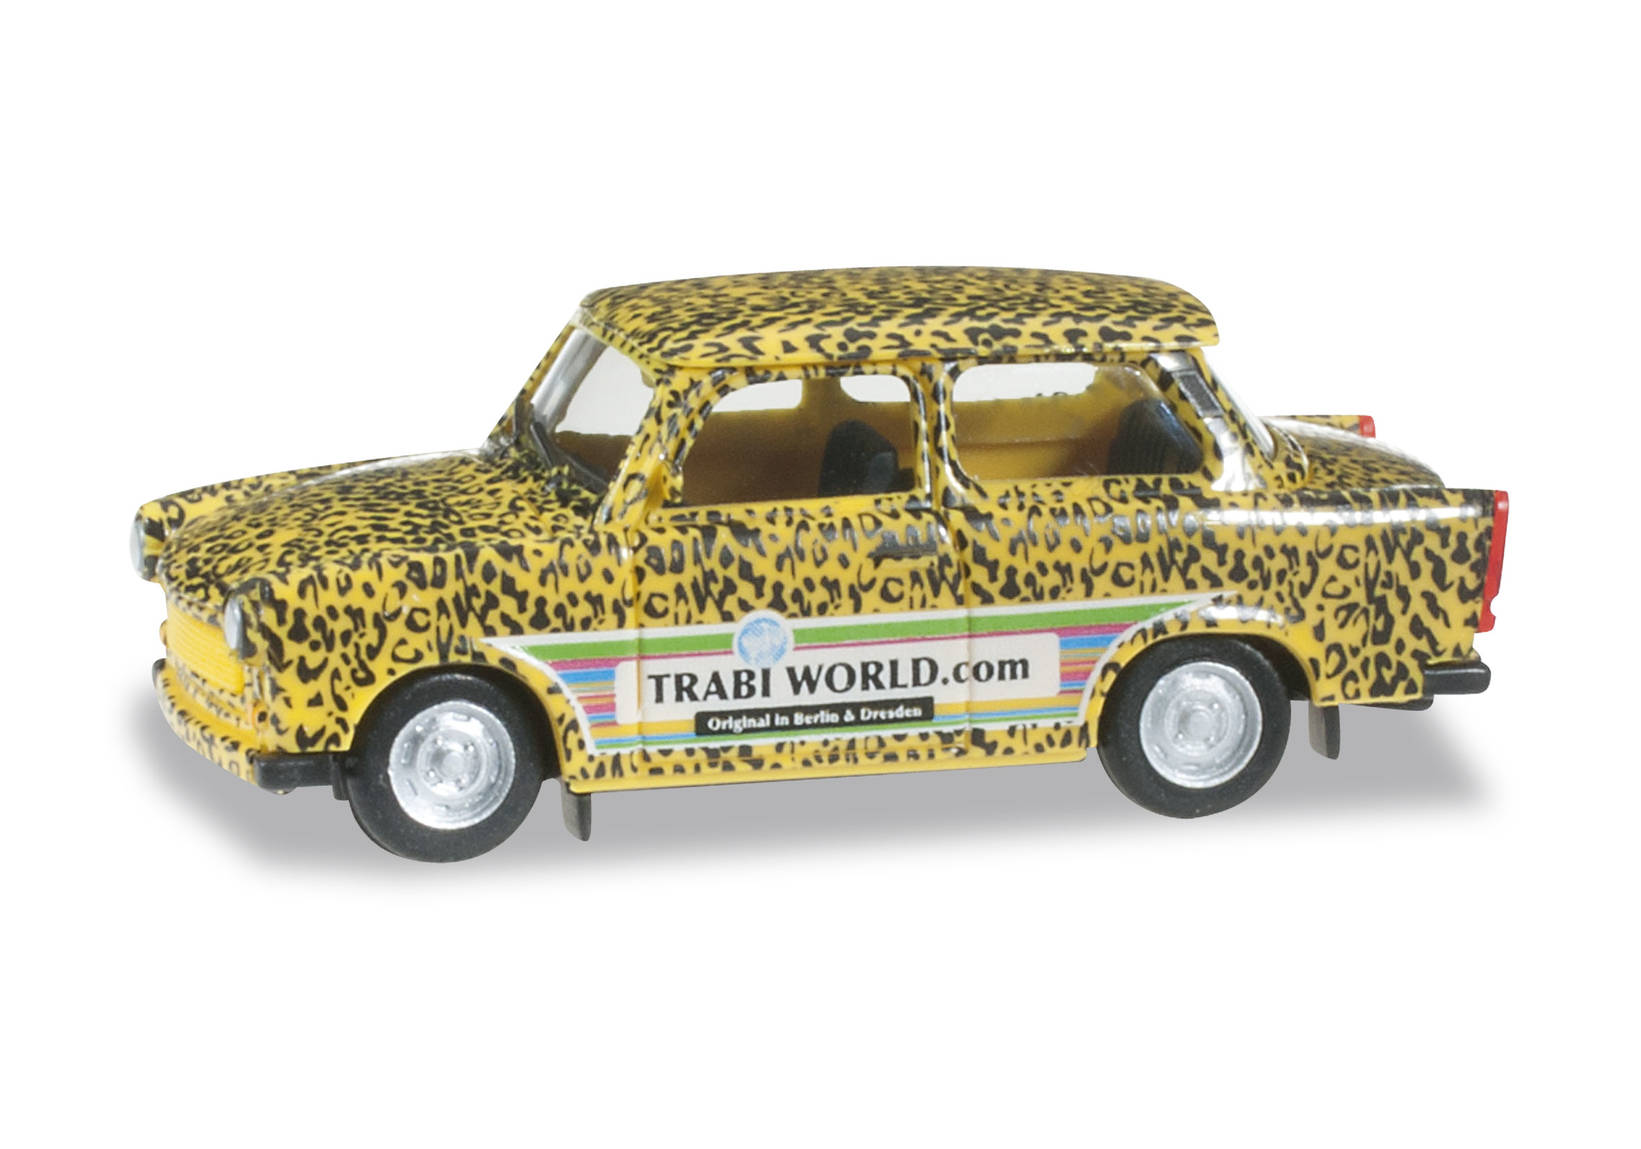 Trabant 601 "Edition Trabi-world.com" Model 2 (Leopard)